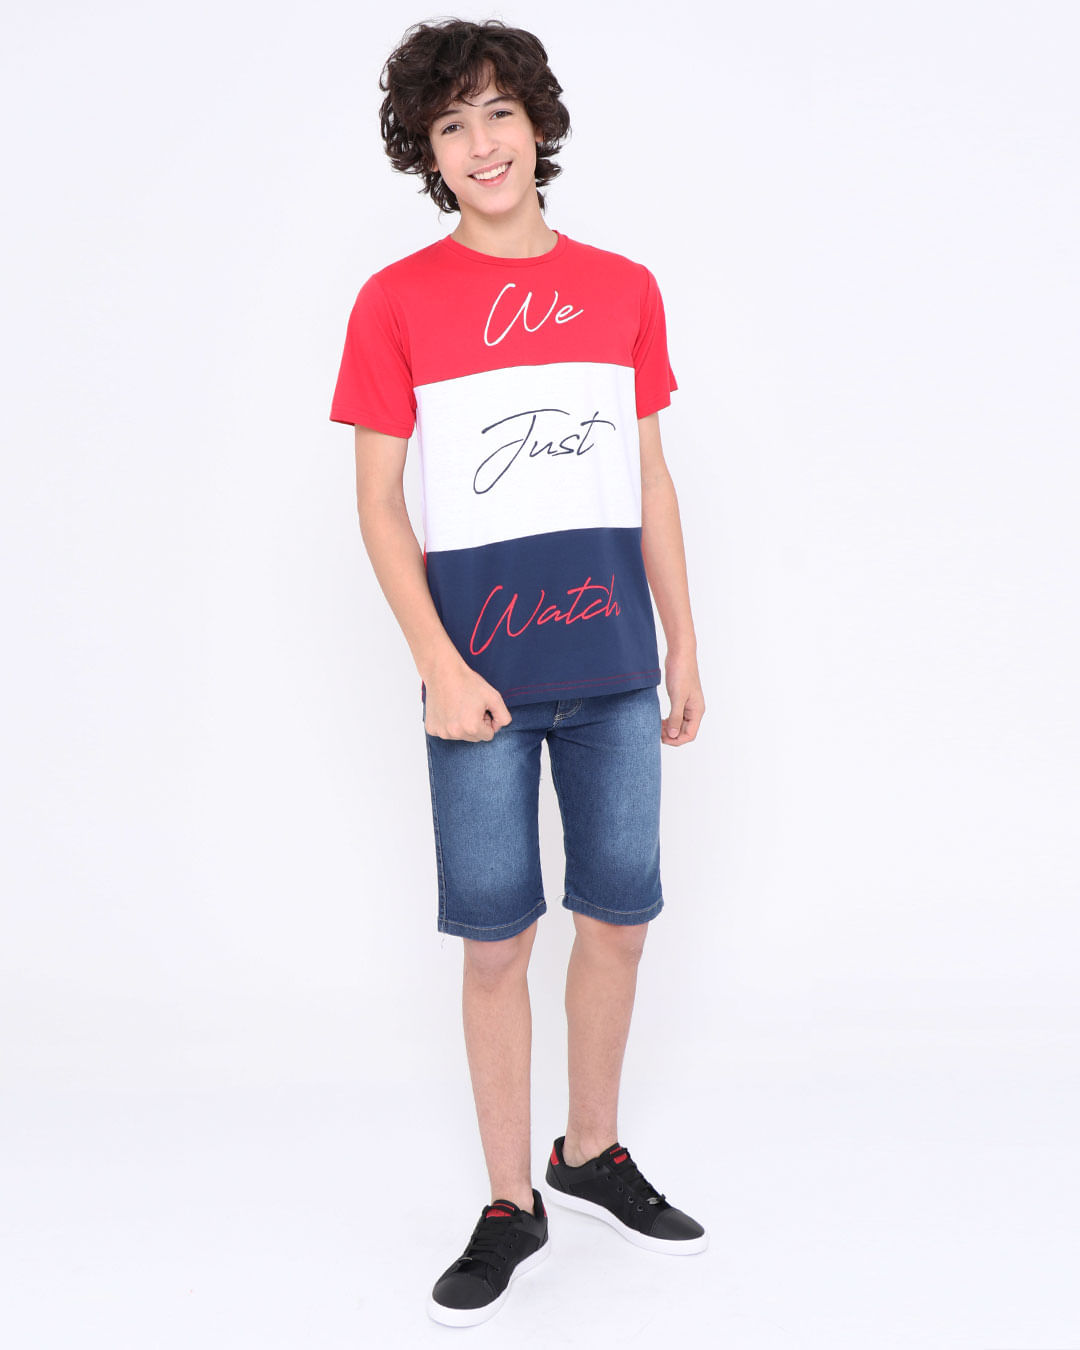 Camiseta-Juvenil-Manga-Curta-Estampa-Frase-Multicor-Vermelho